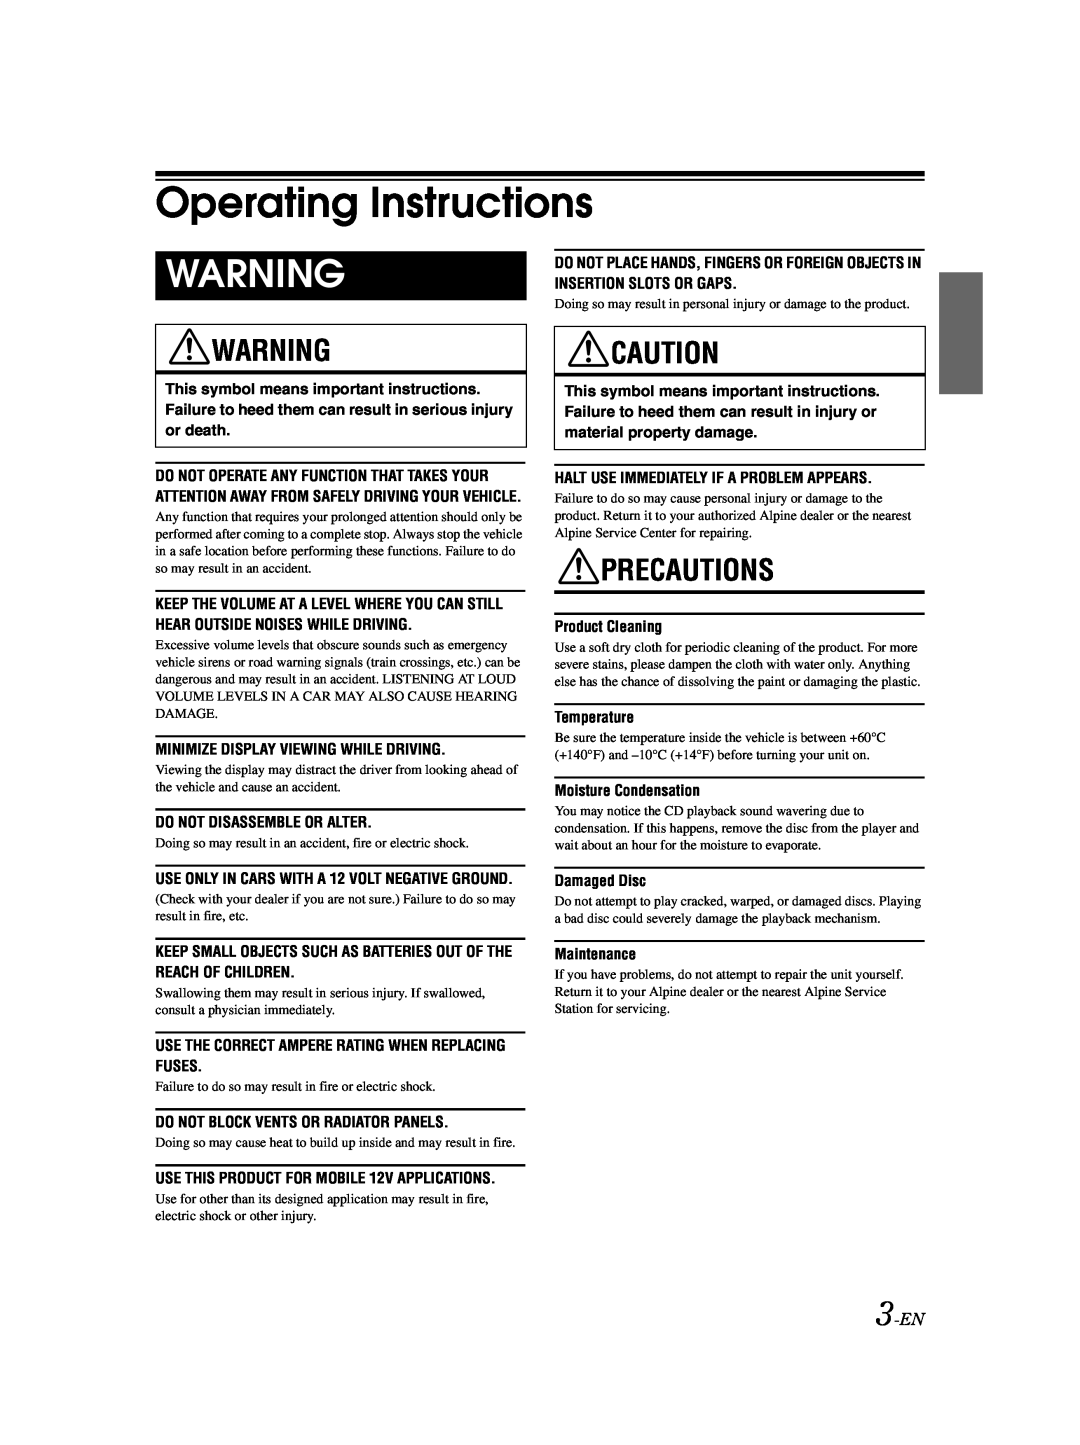 Alpine CDE-9881 owner manual Operating Instructions, Precautions, 3-EN 